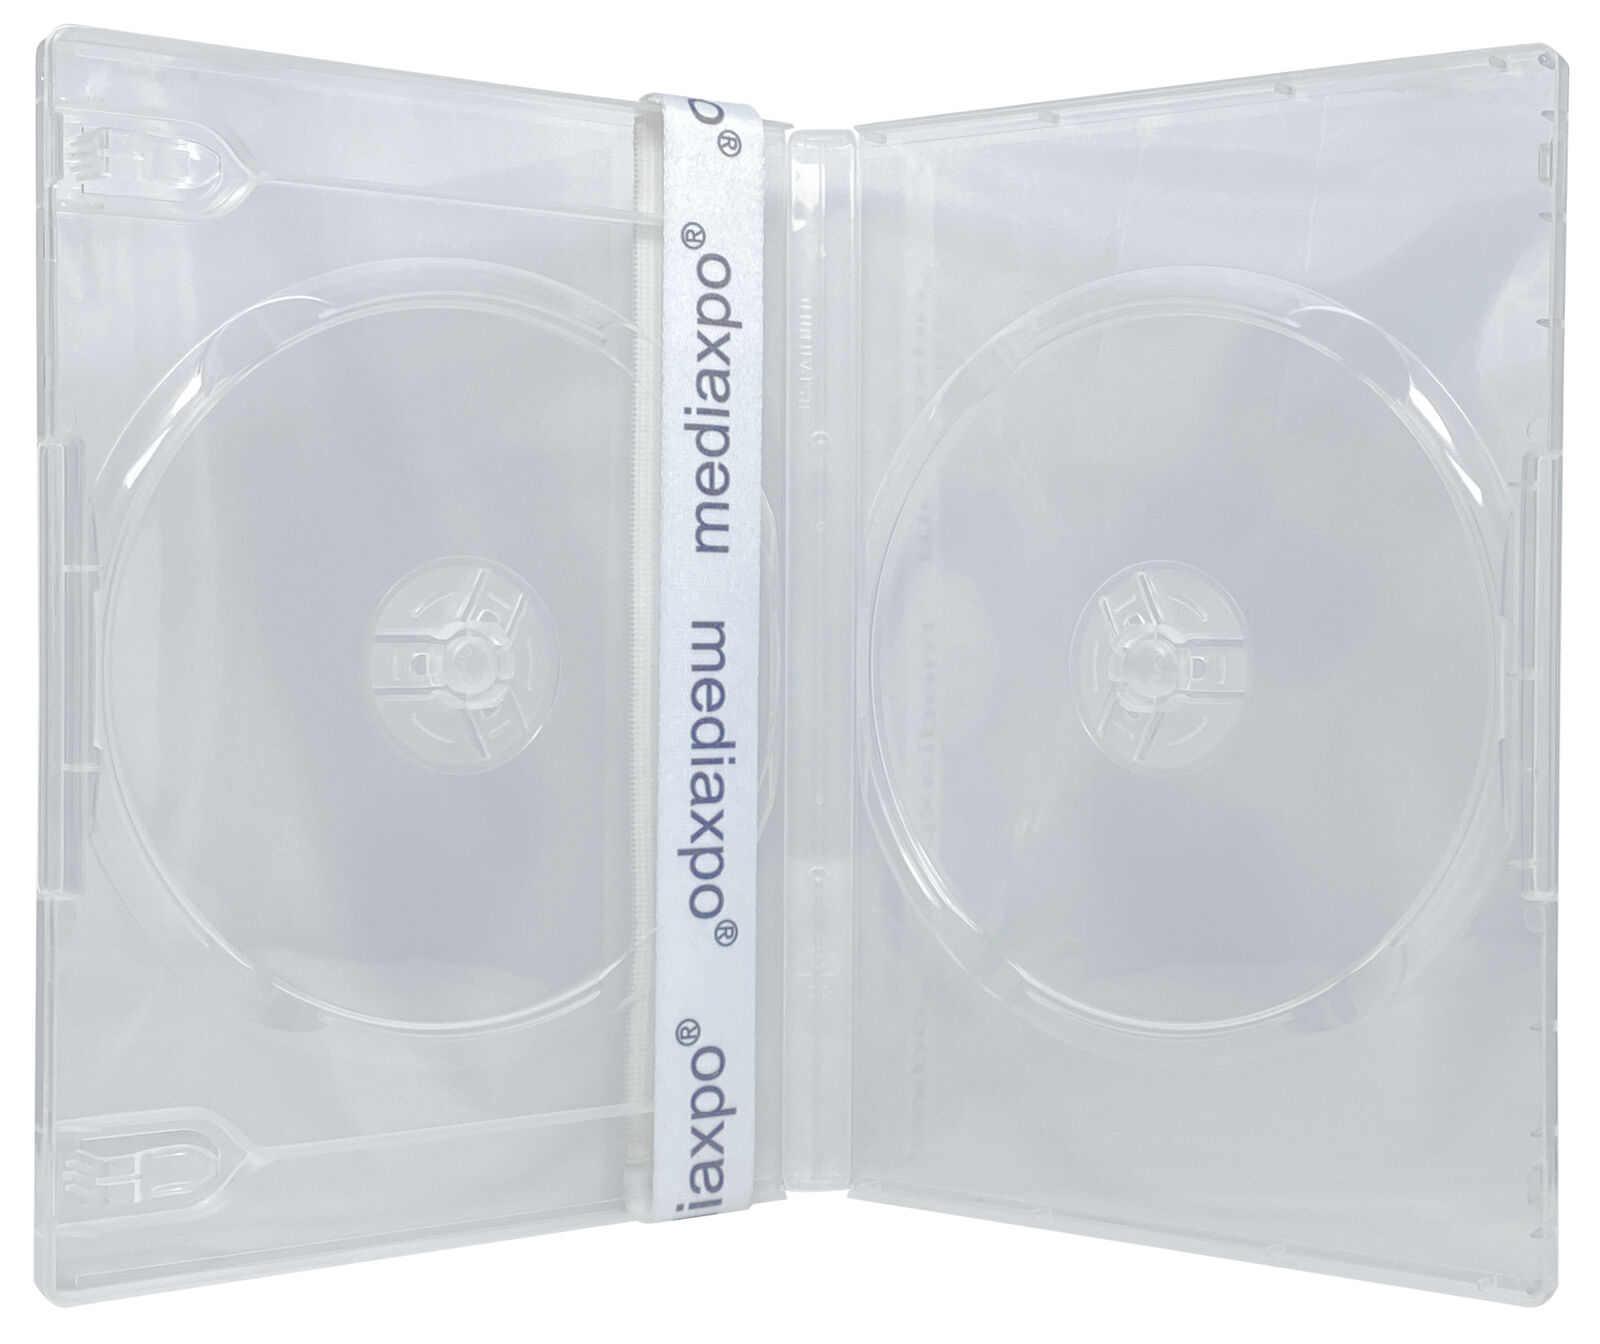 14mm Standard Super Clear Double 2 Discs DVD Case Lot